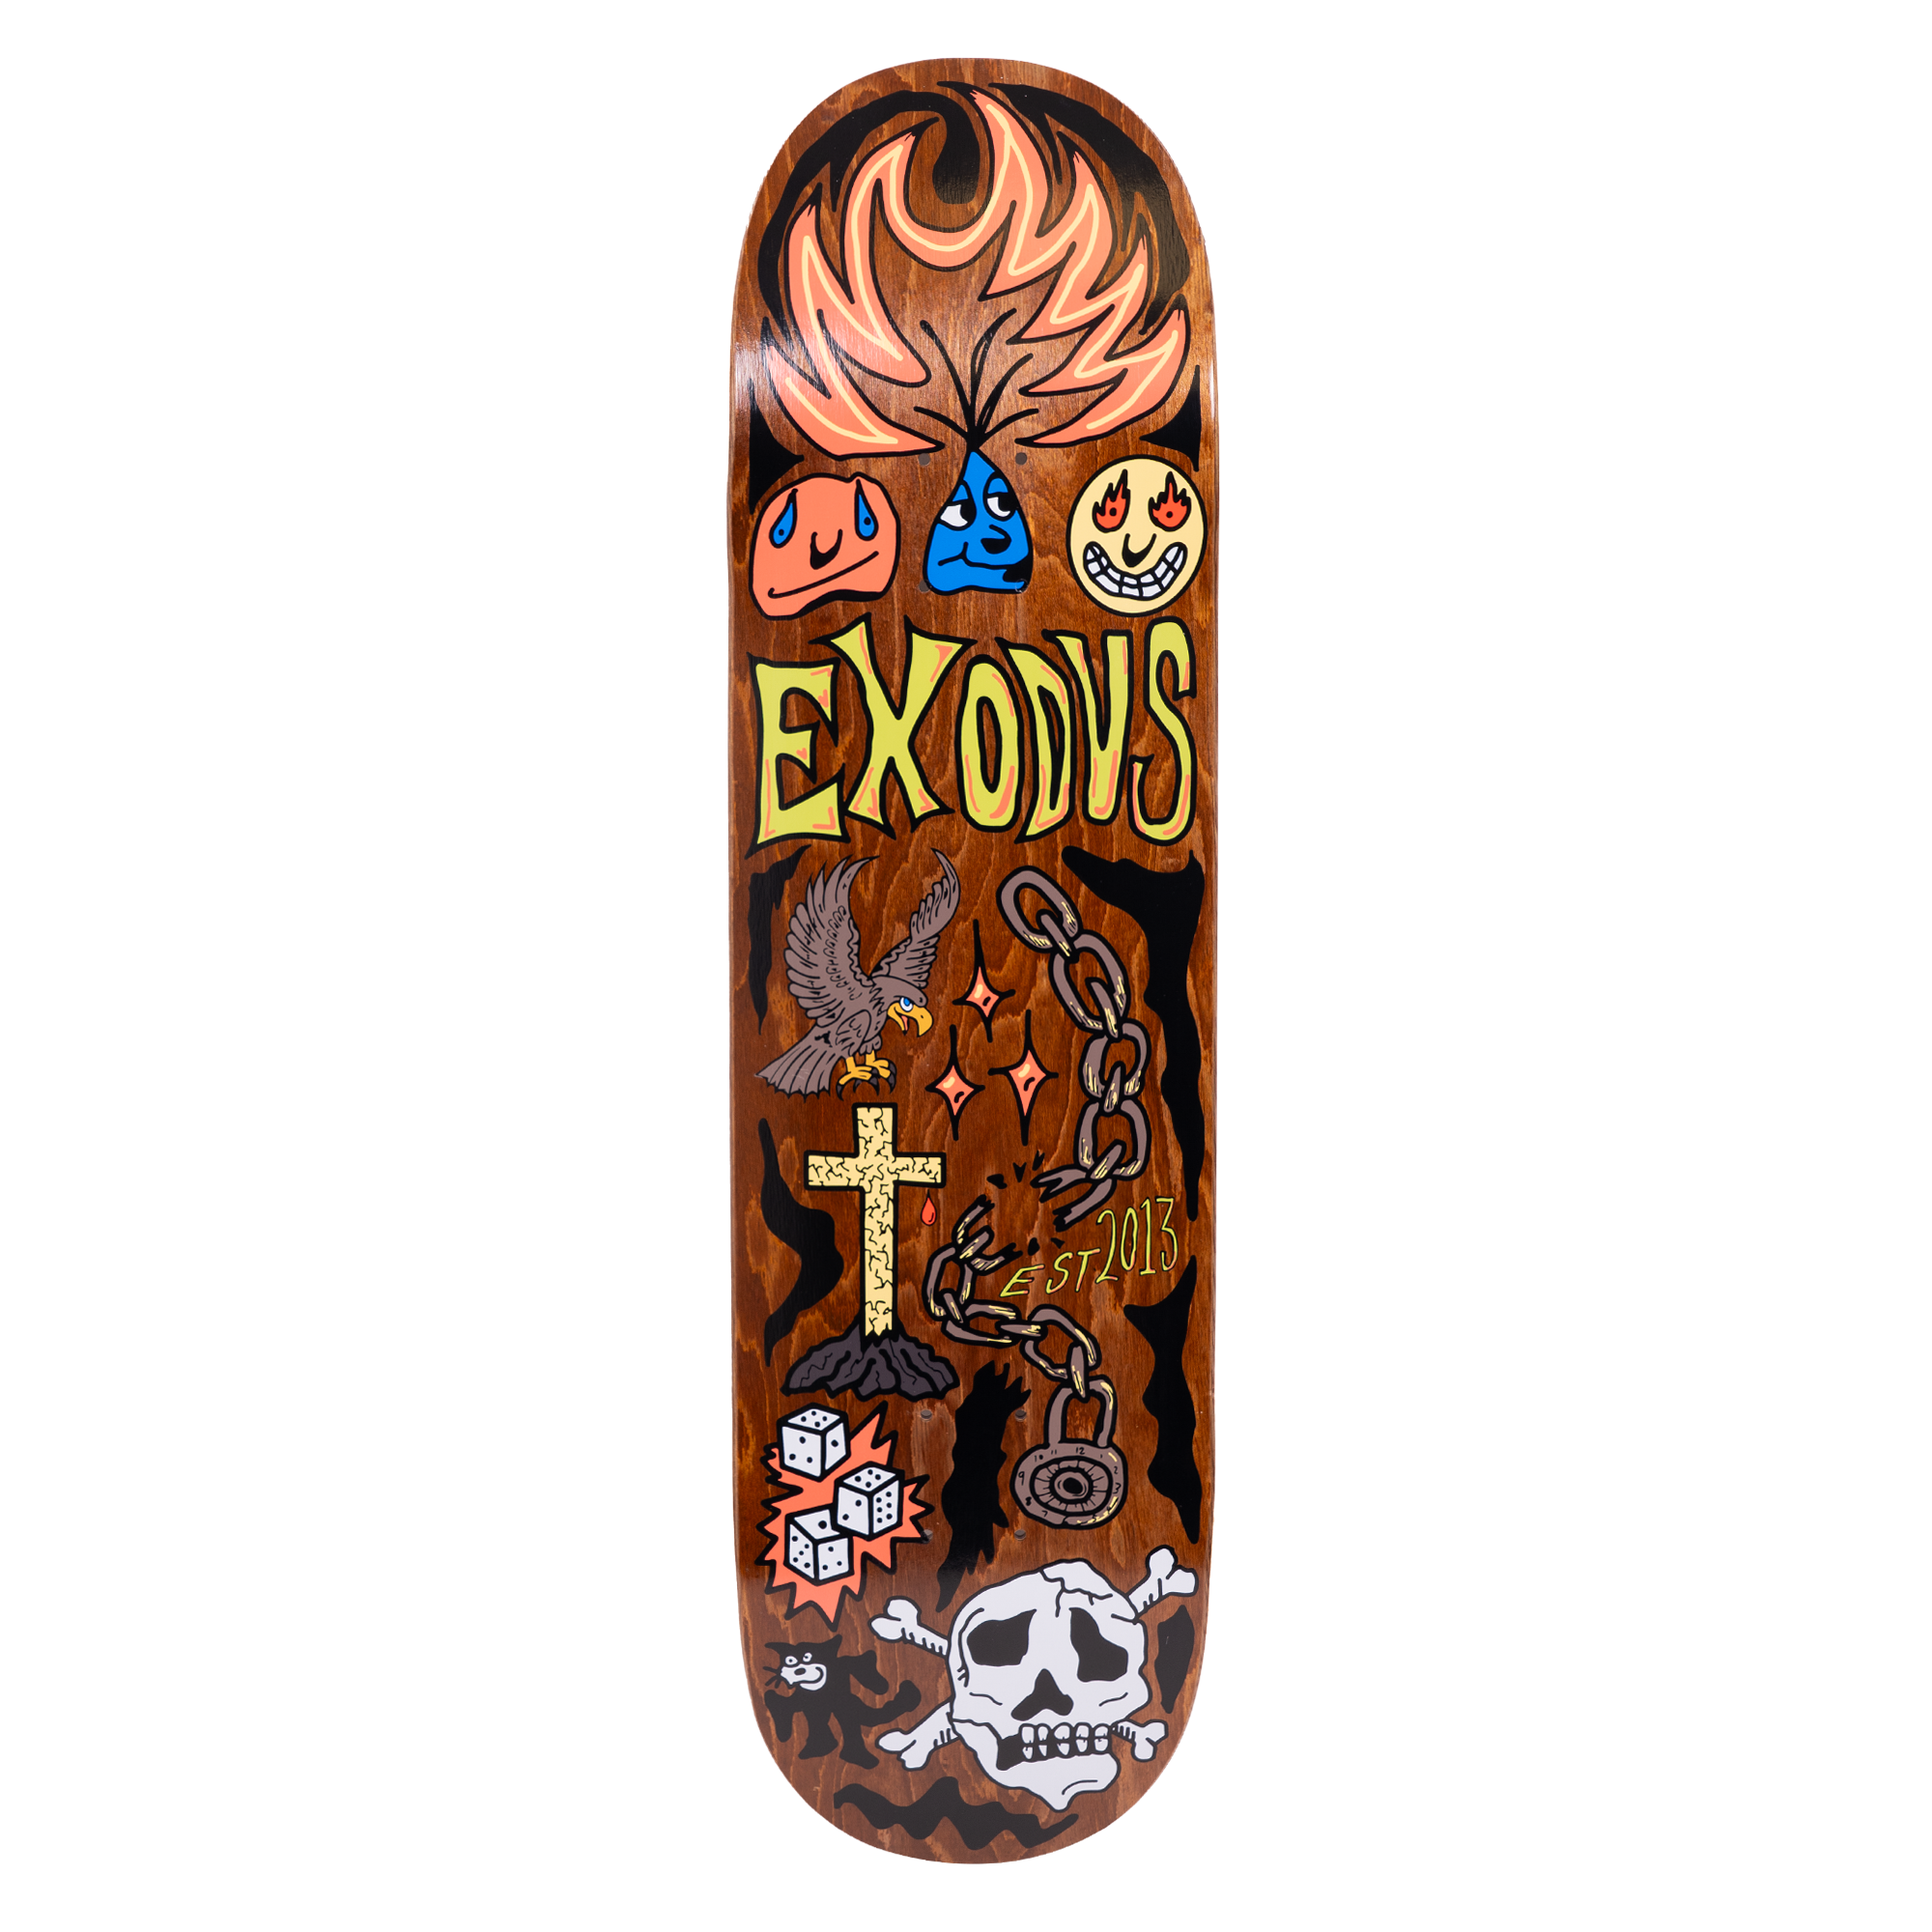 Exodus Sketchy Skateboard Deck - Assorted Stains